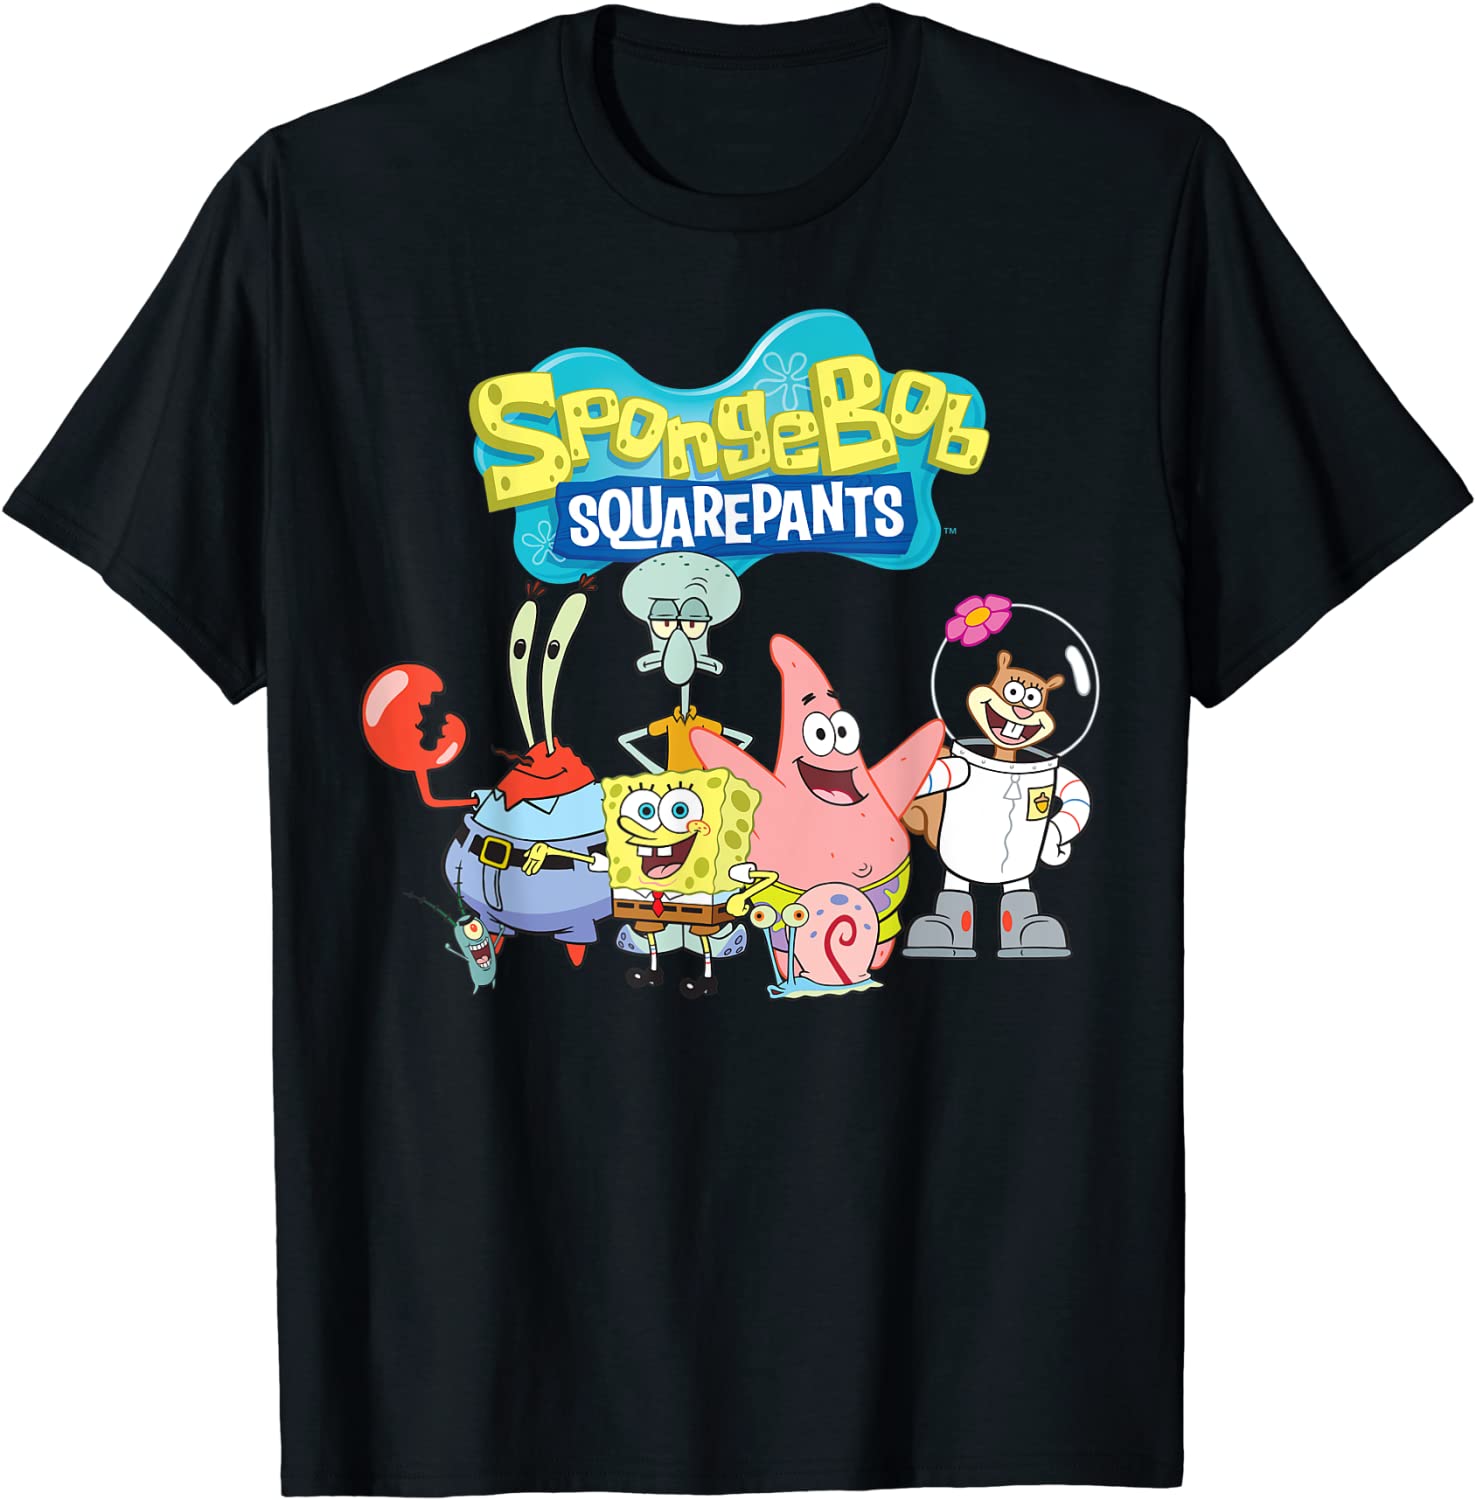 Spongebob Squarepants Friends t-shirt by To-Tee Clothing - Issuu